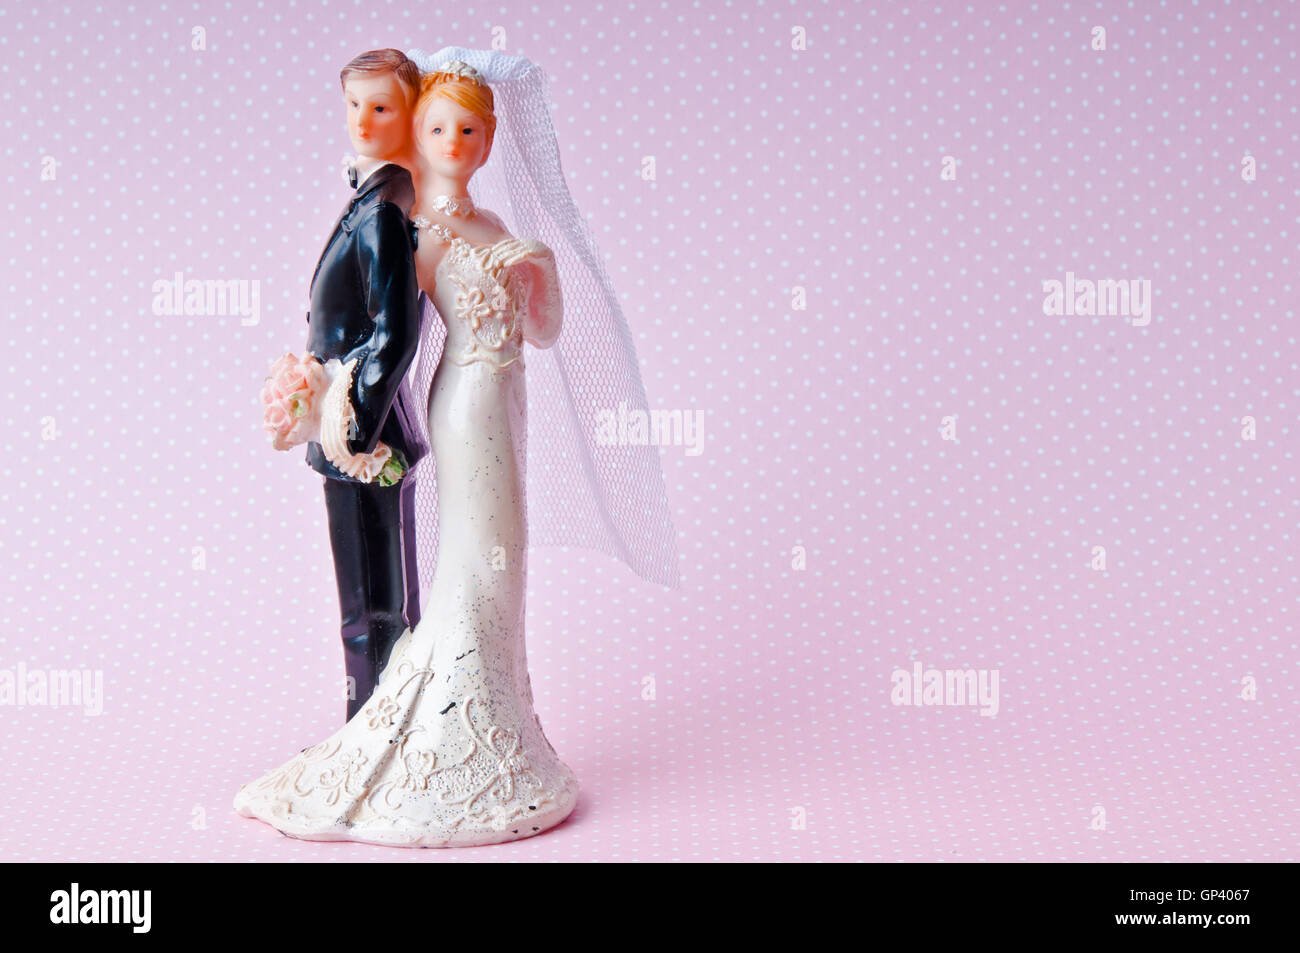 heterosexual bride and groom cake topper Stock Photo